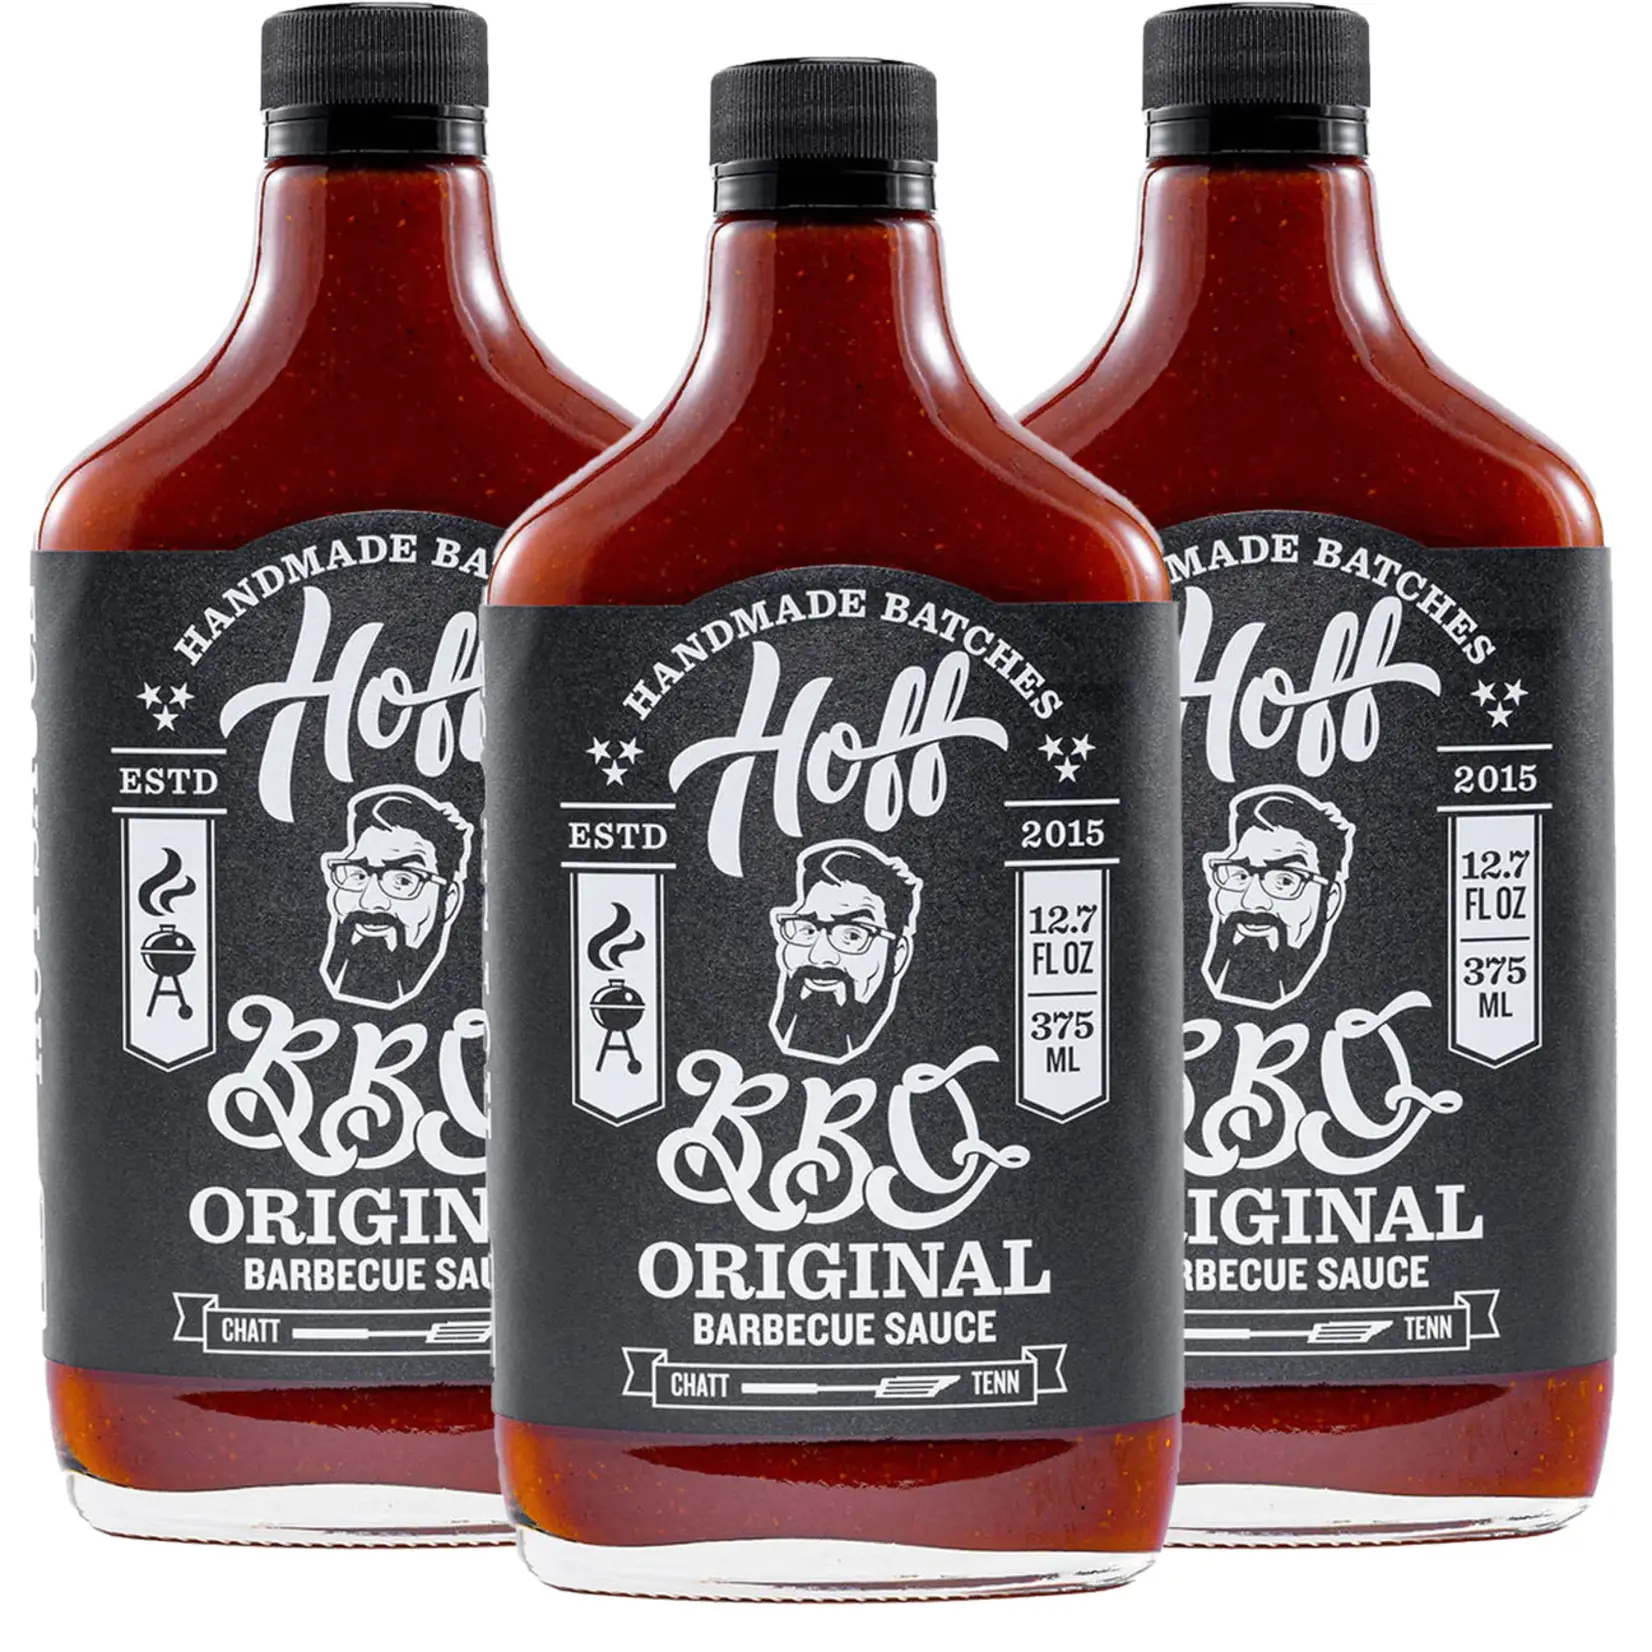 Hoff's Sauce Original BBQ Sauce